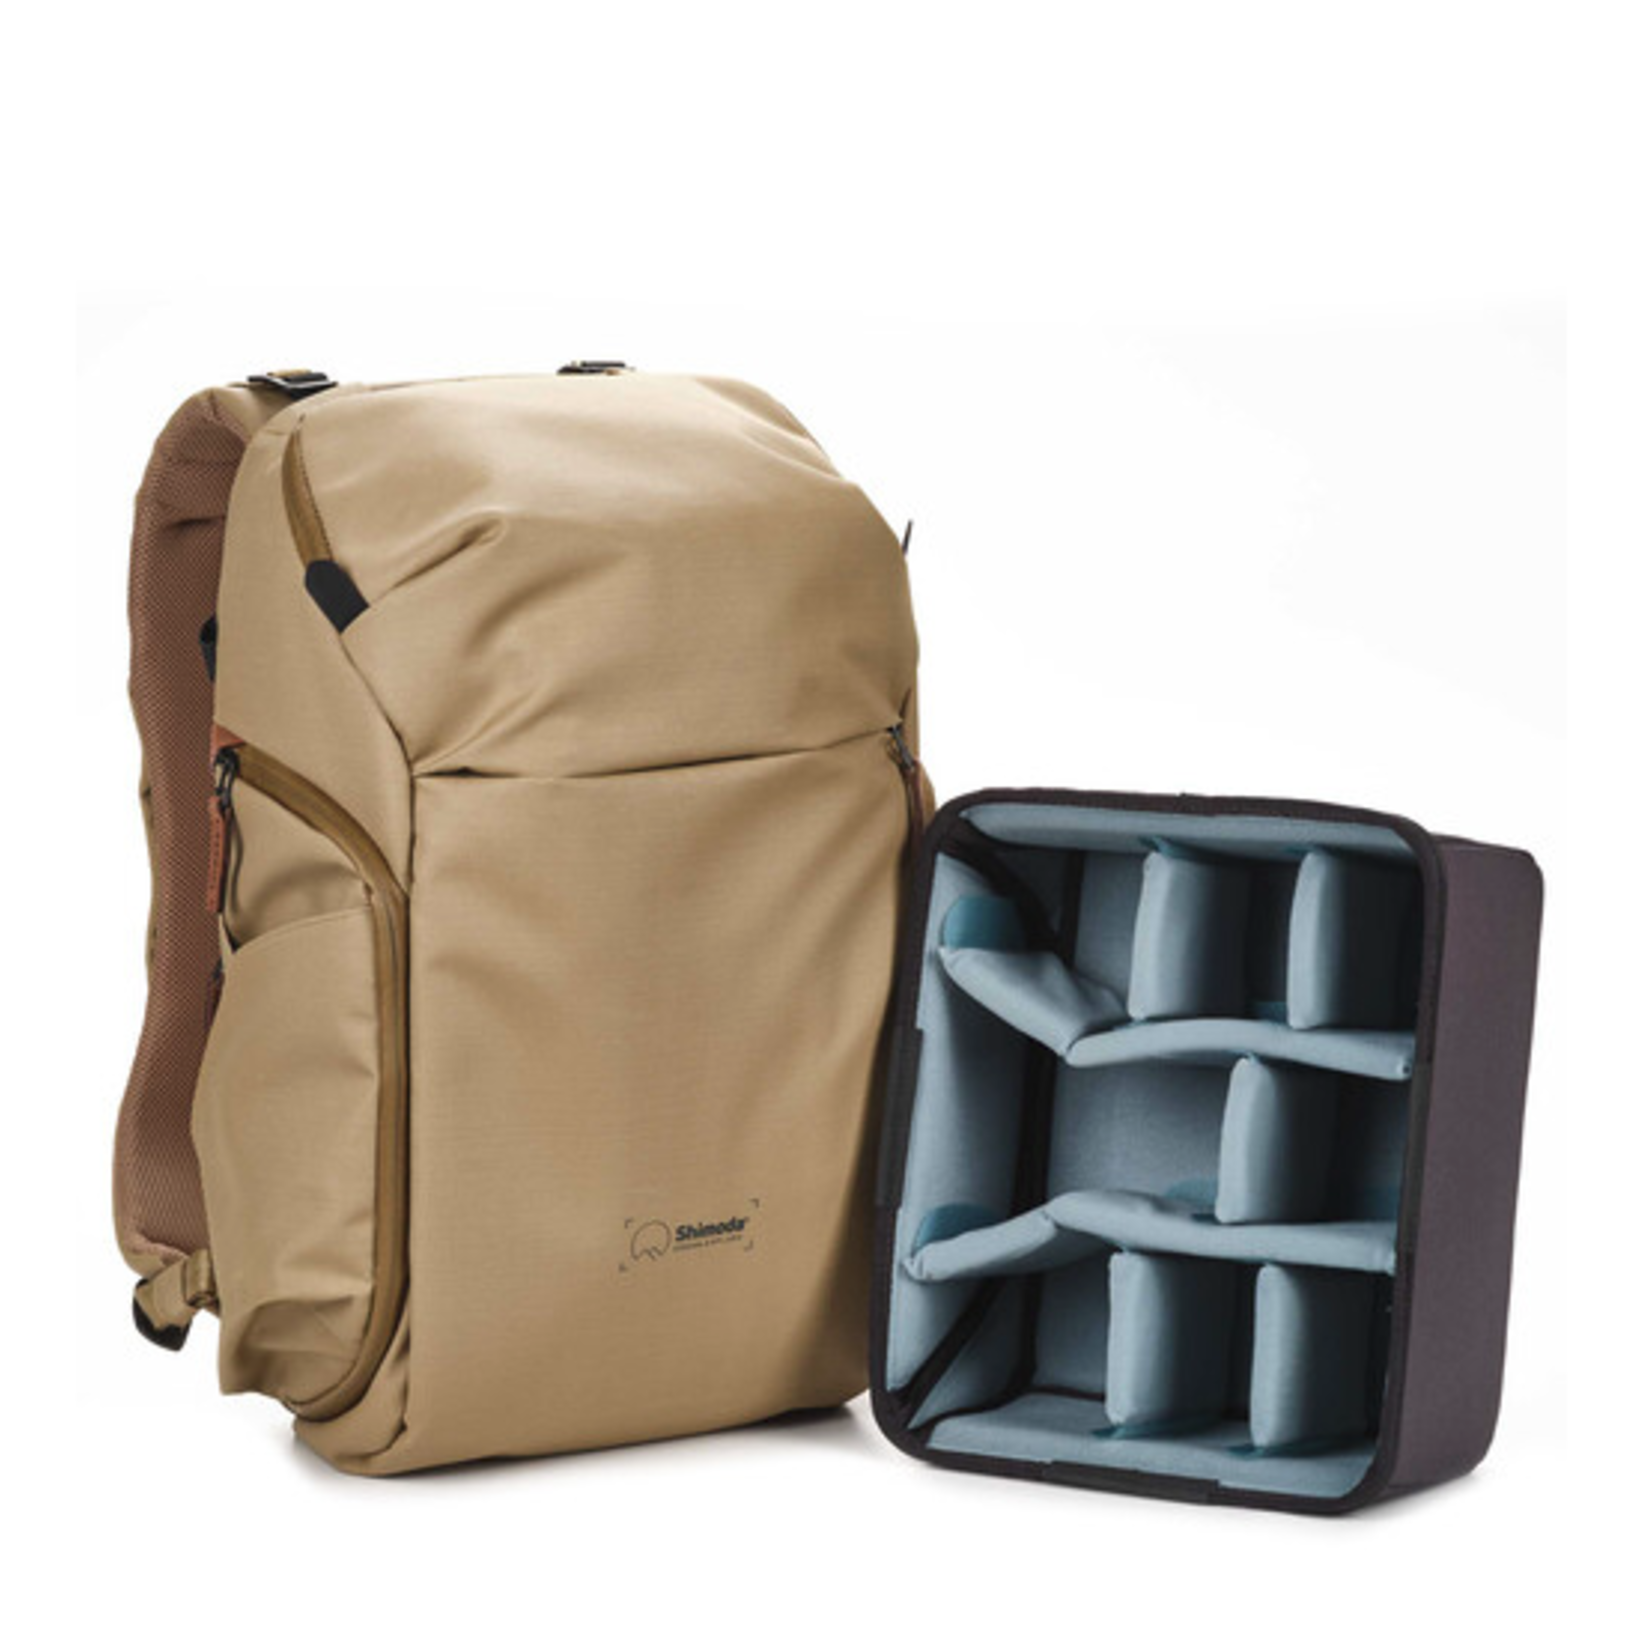 Shimoda Shimoda Designs Urban Explore Backpack 25L